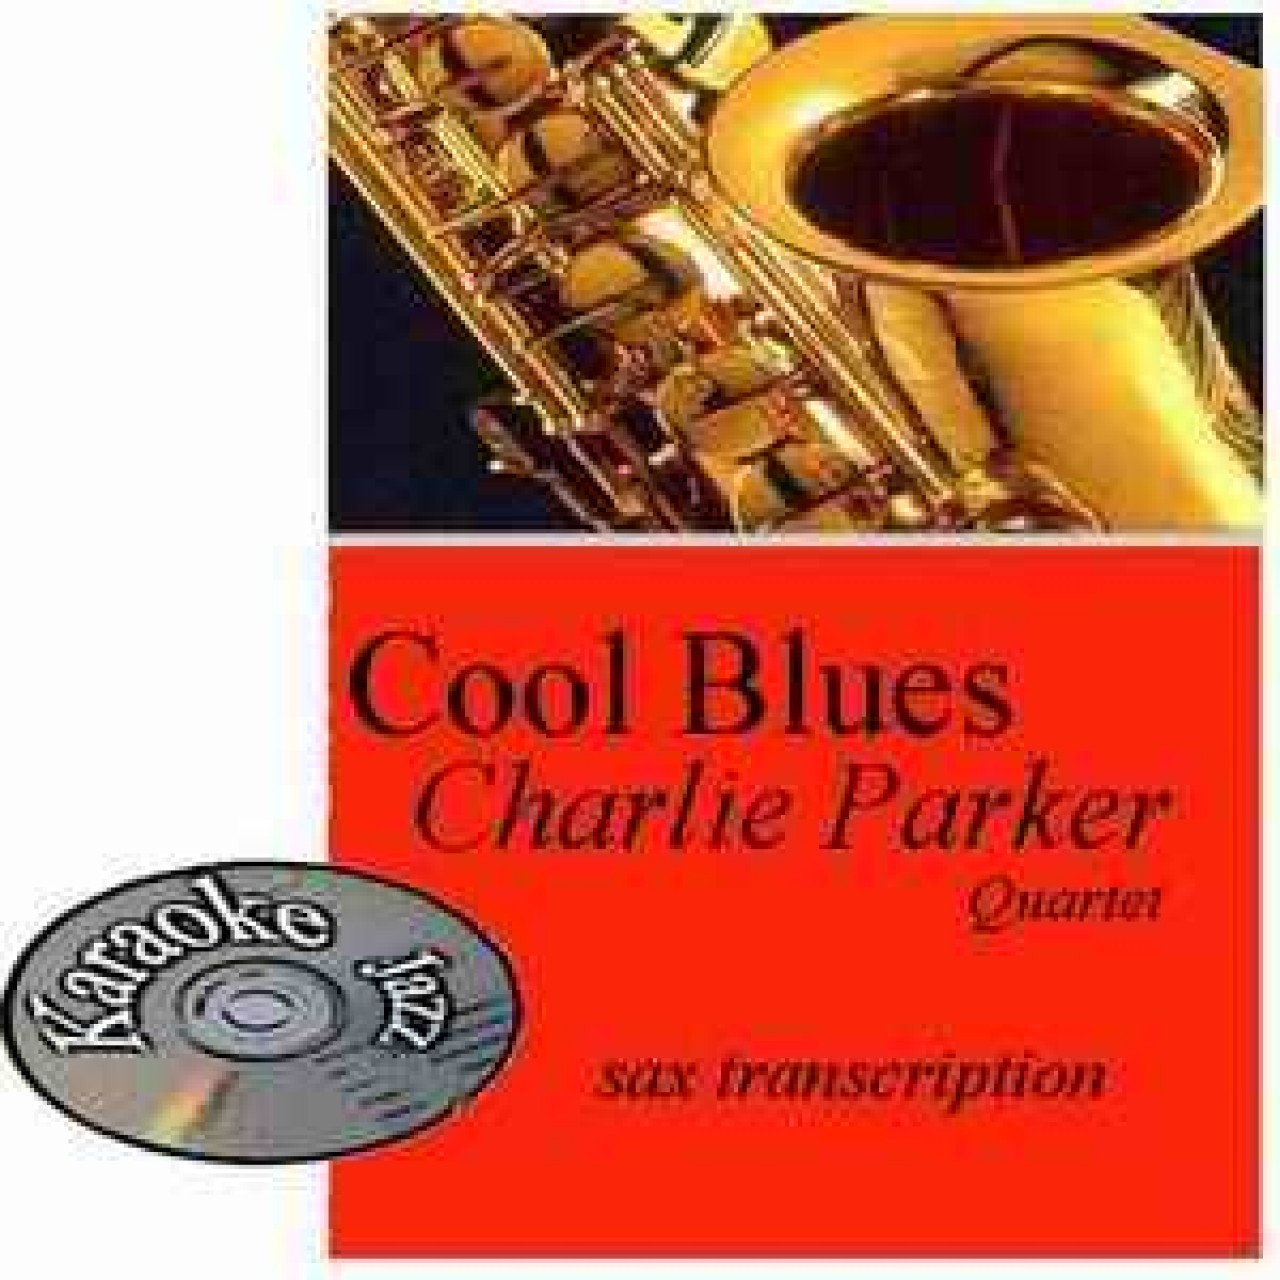 Cool Blues alto sax